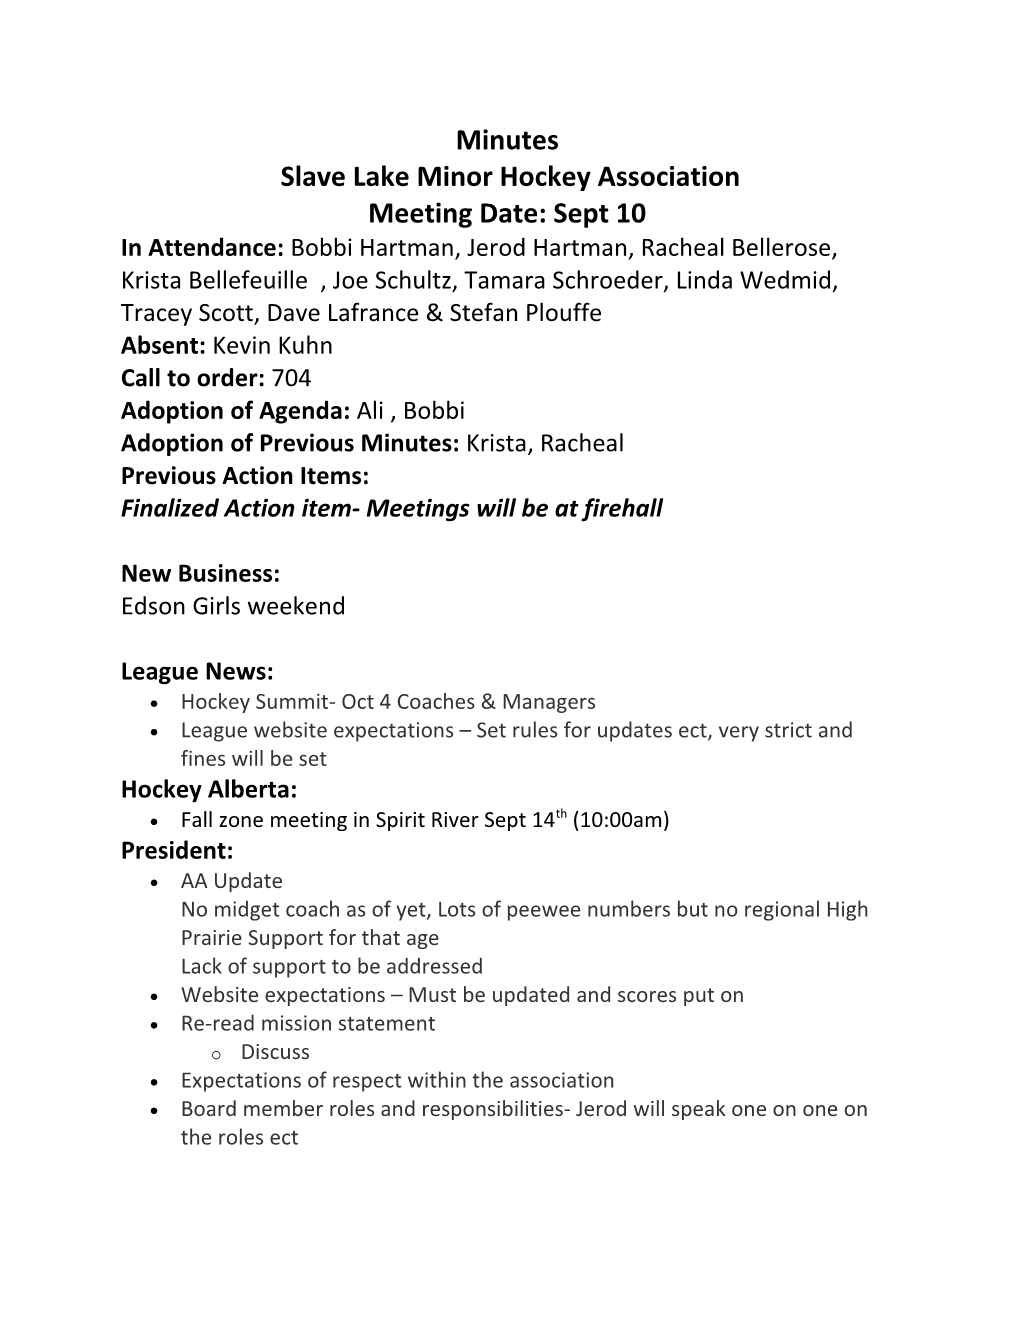 Slave Lake Minor Hockey Association s1